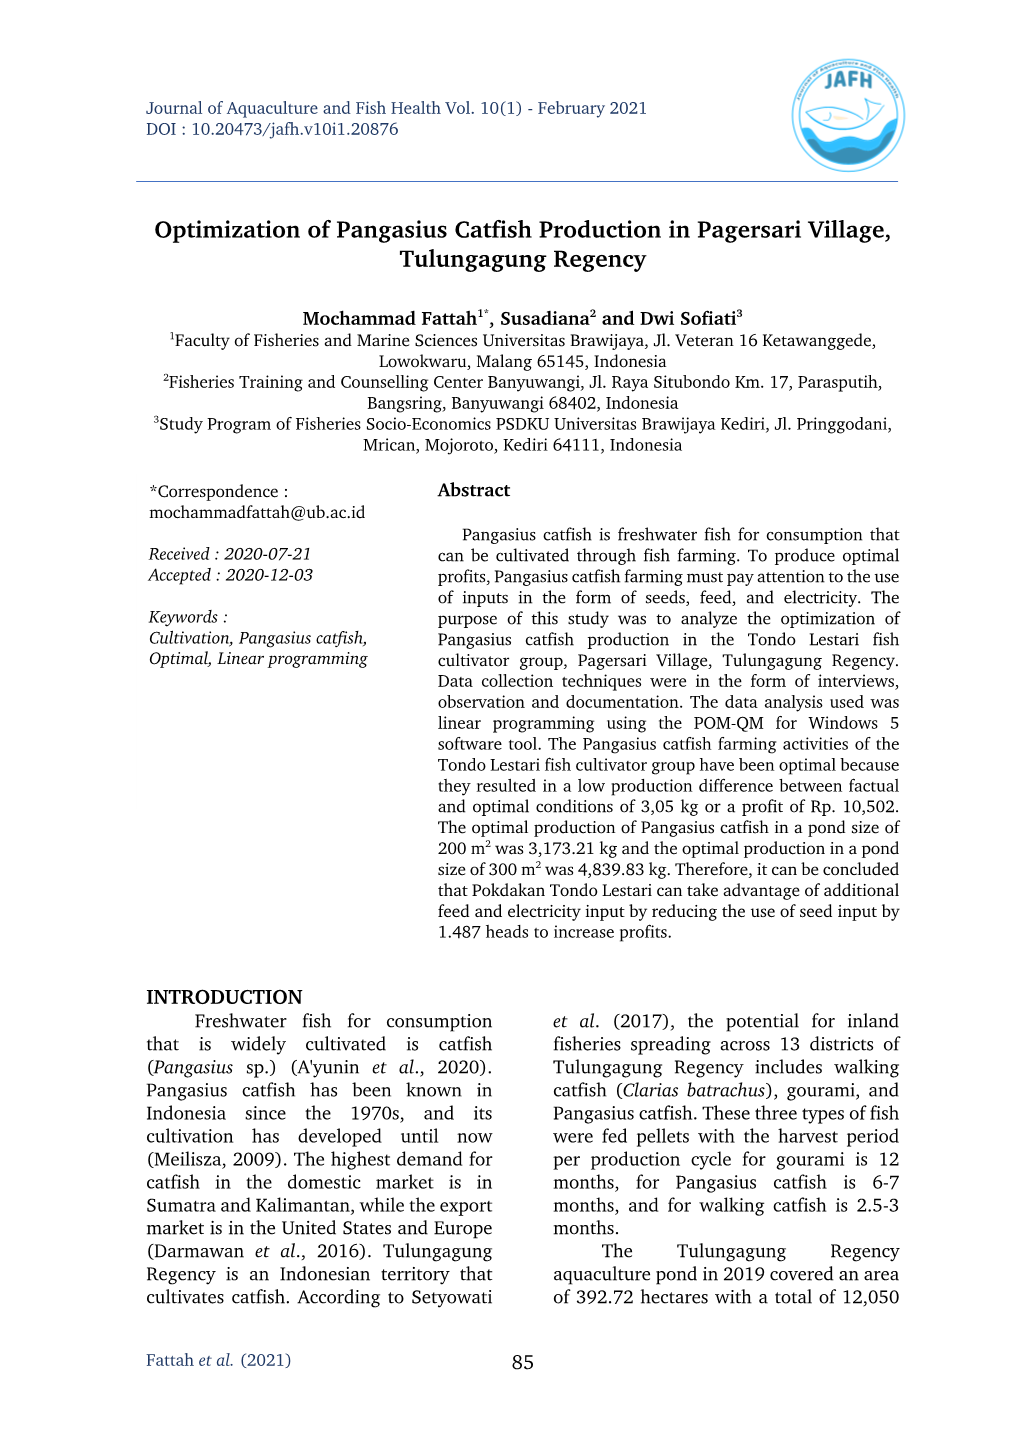 Optimization of Pangasius Catfish Production in Pagersari Village, Tulungagung Regency